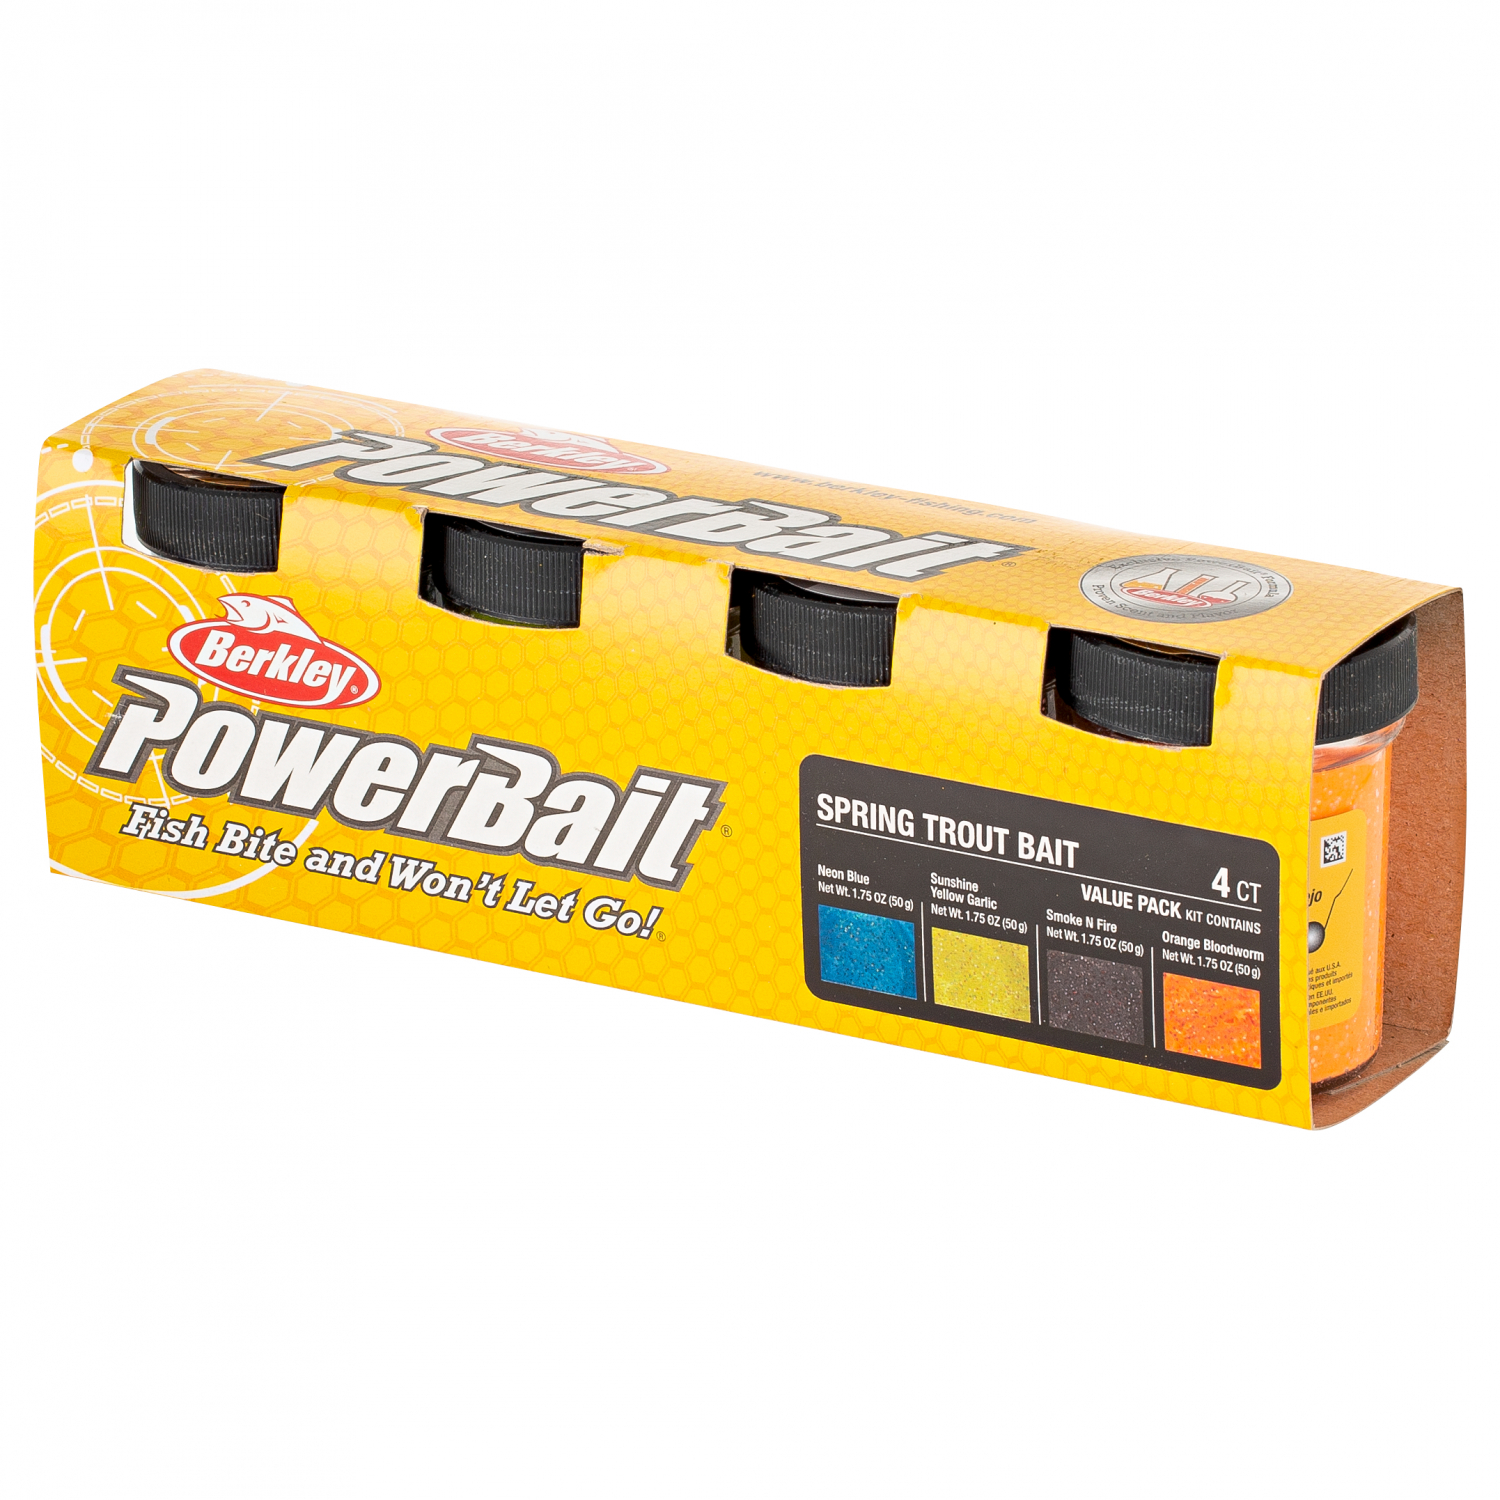 Berkley PowerBait® Trout Season Pack at low prices